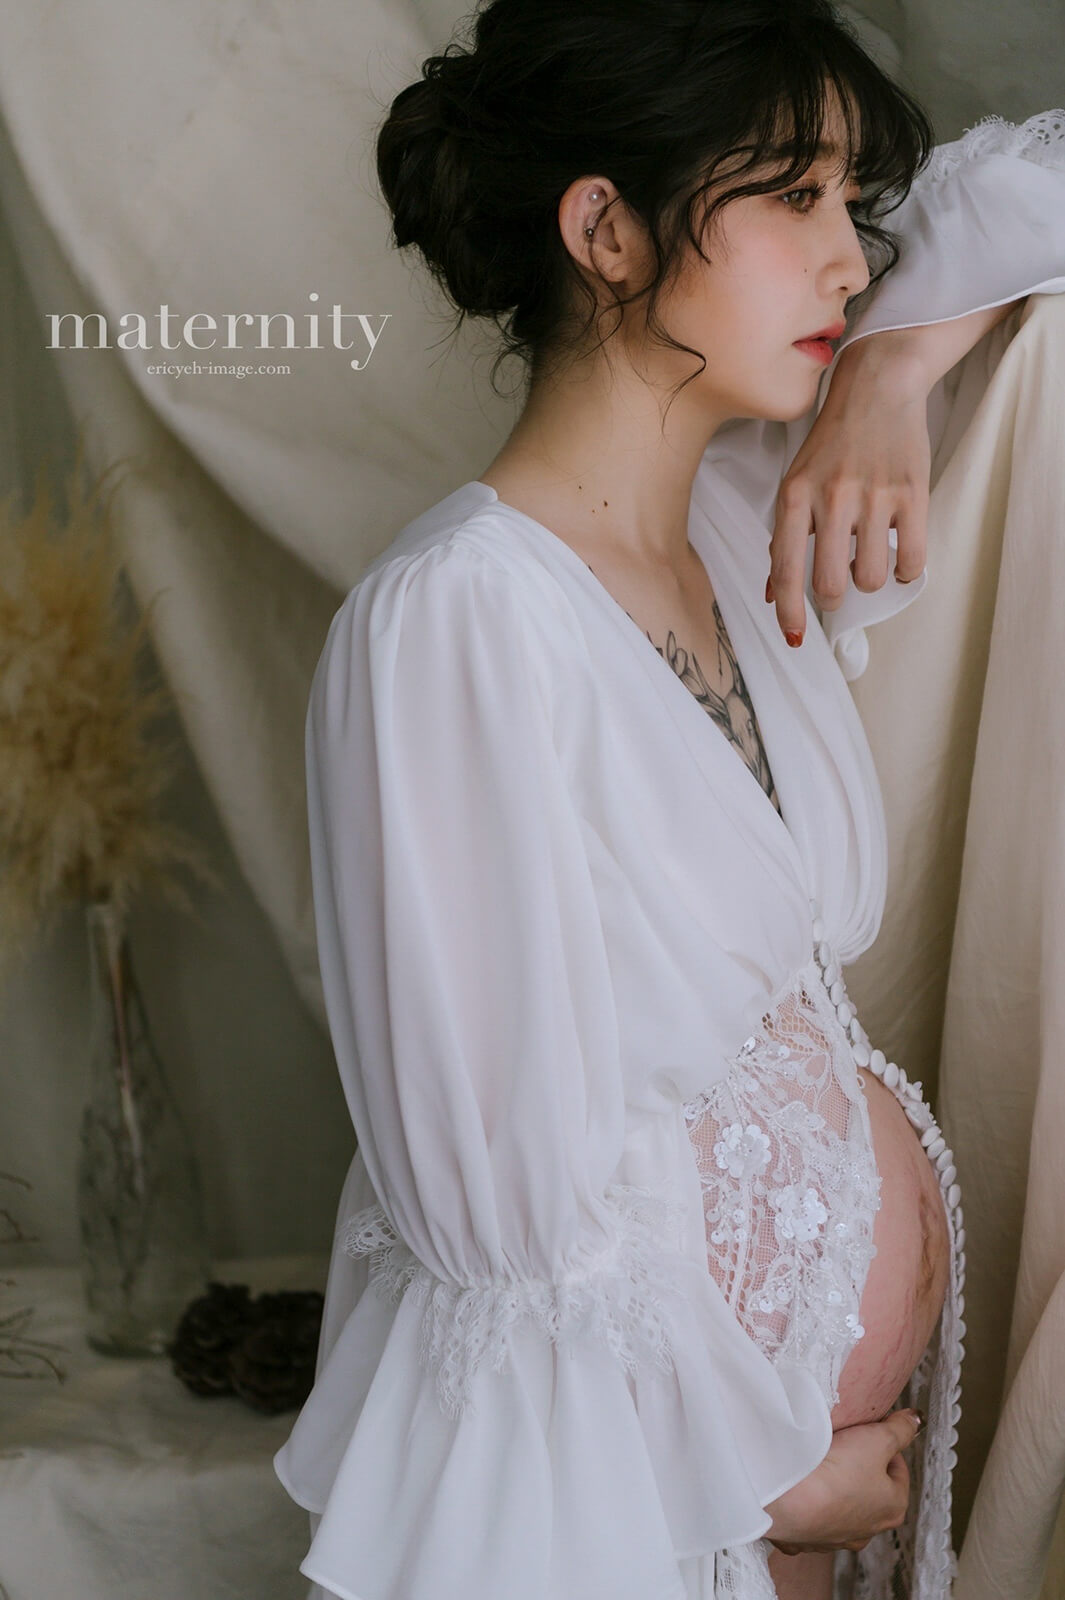 Maternity make up / Photography : Eric